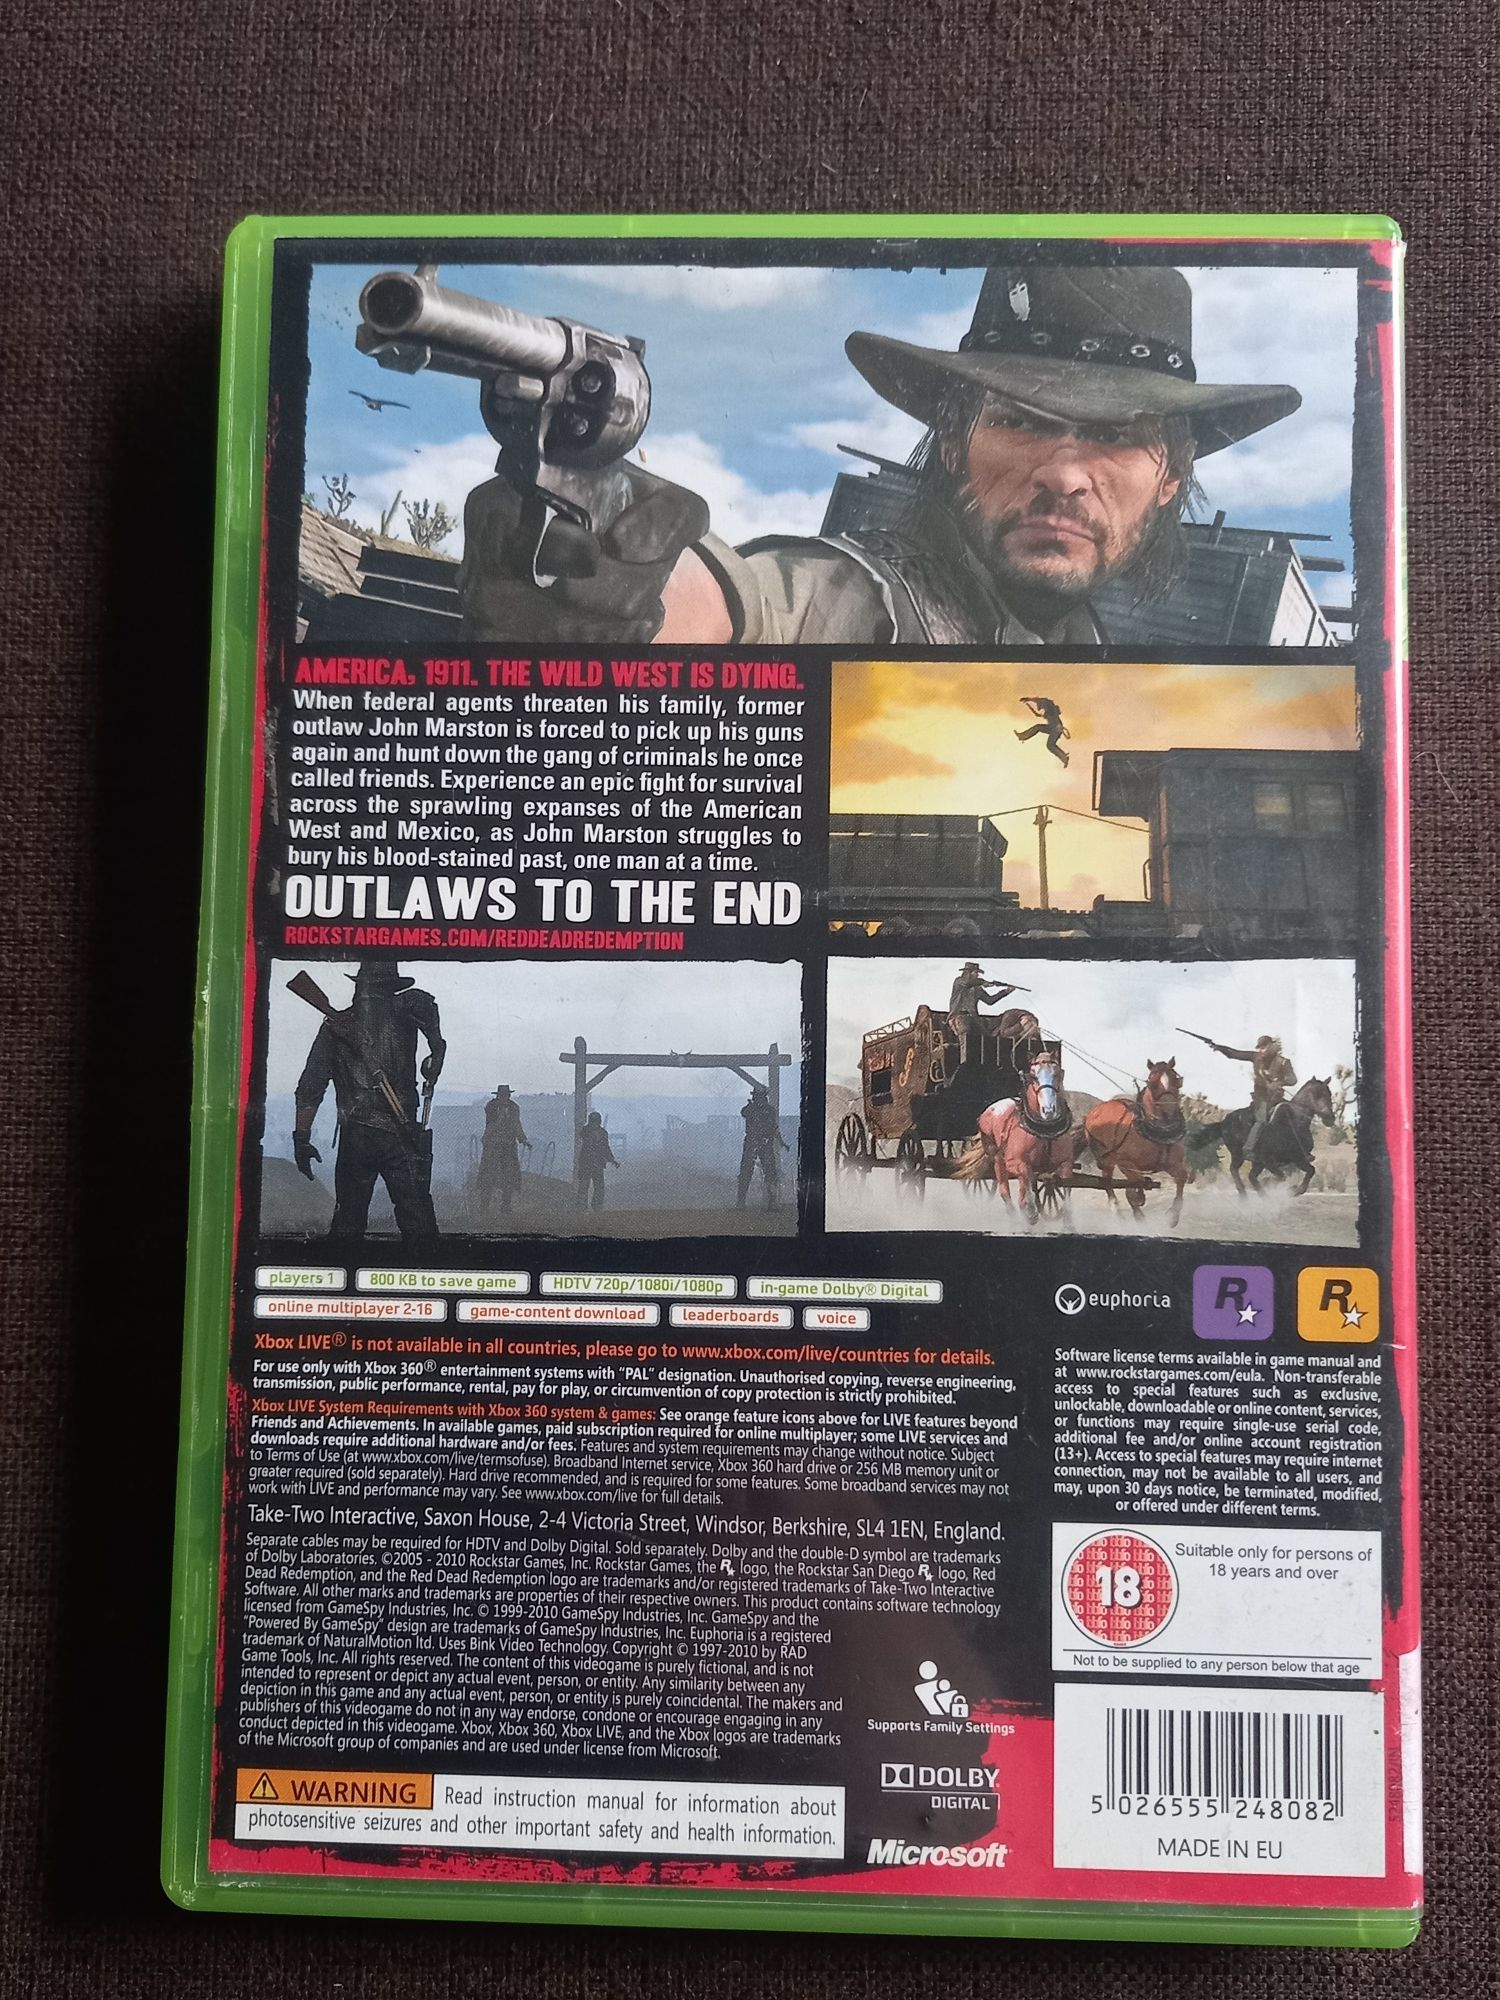 Gra Red Dead Redemption + mapa  na xbox 360